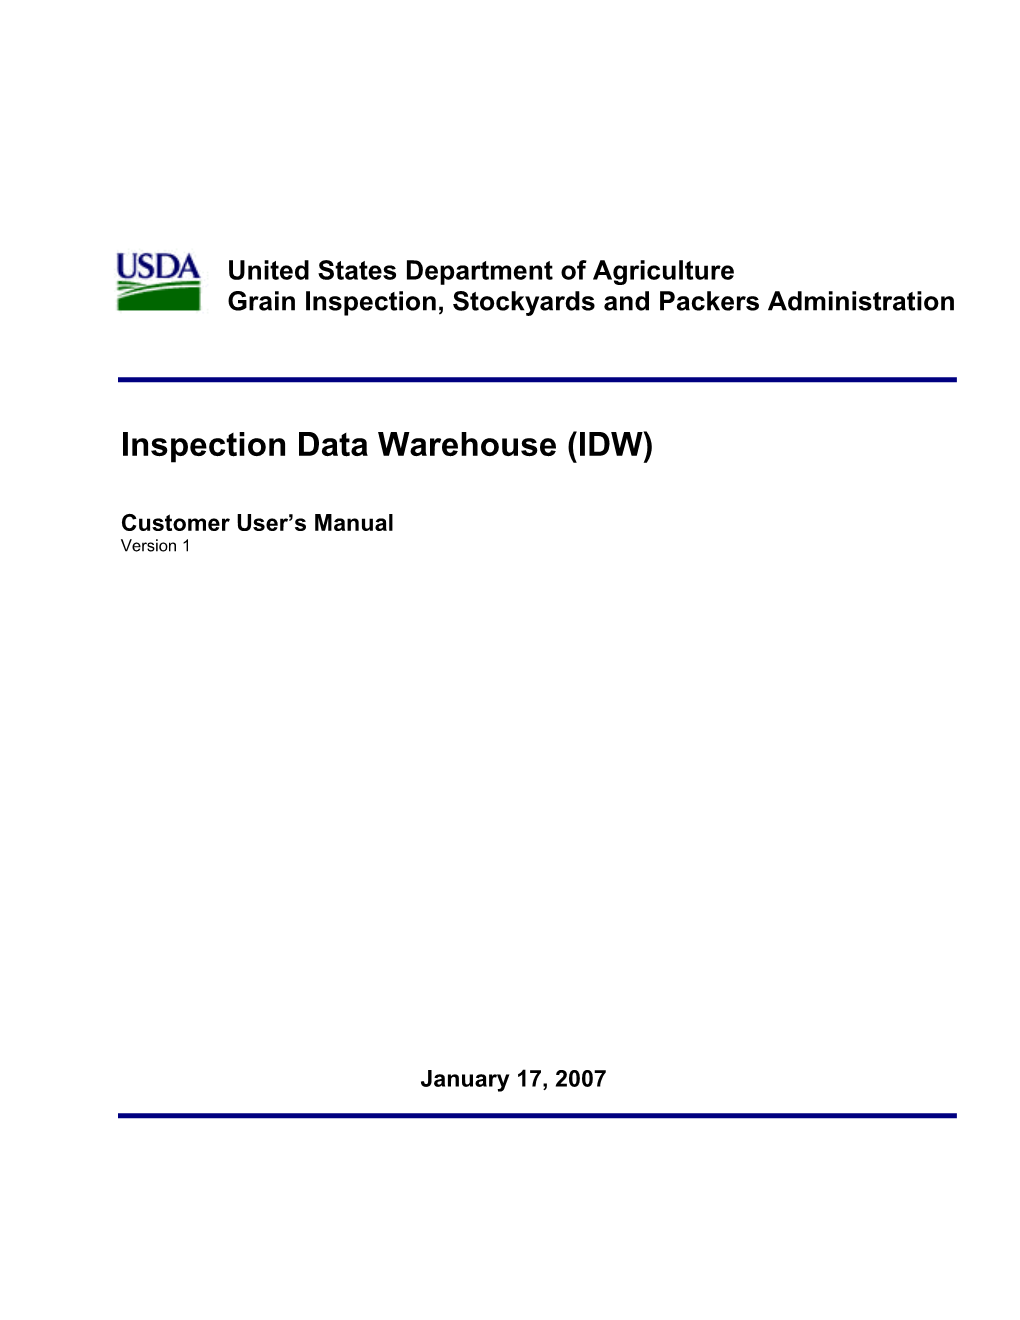 Inspection Data Warehouse (IDW)